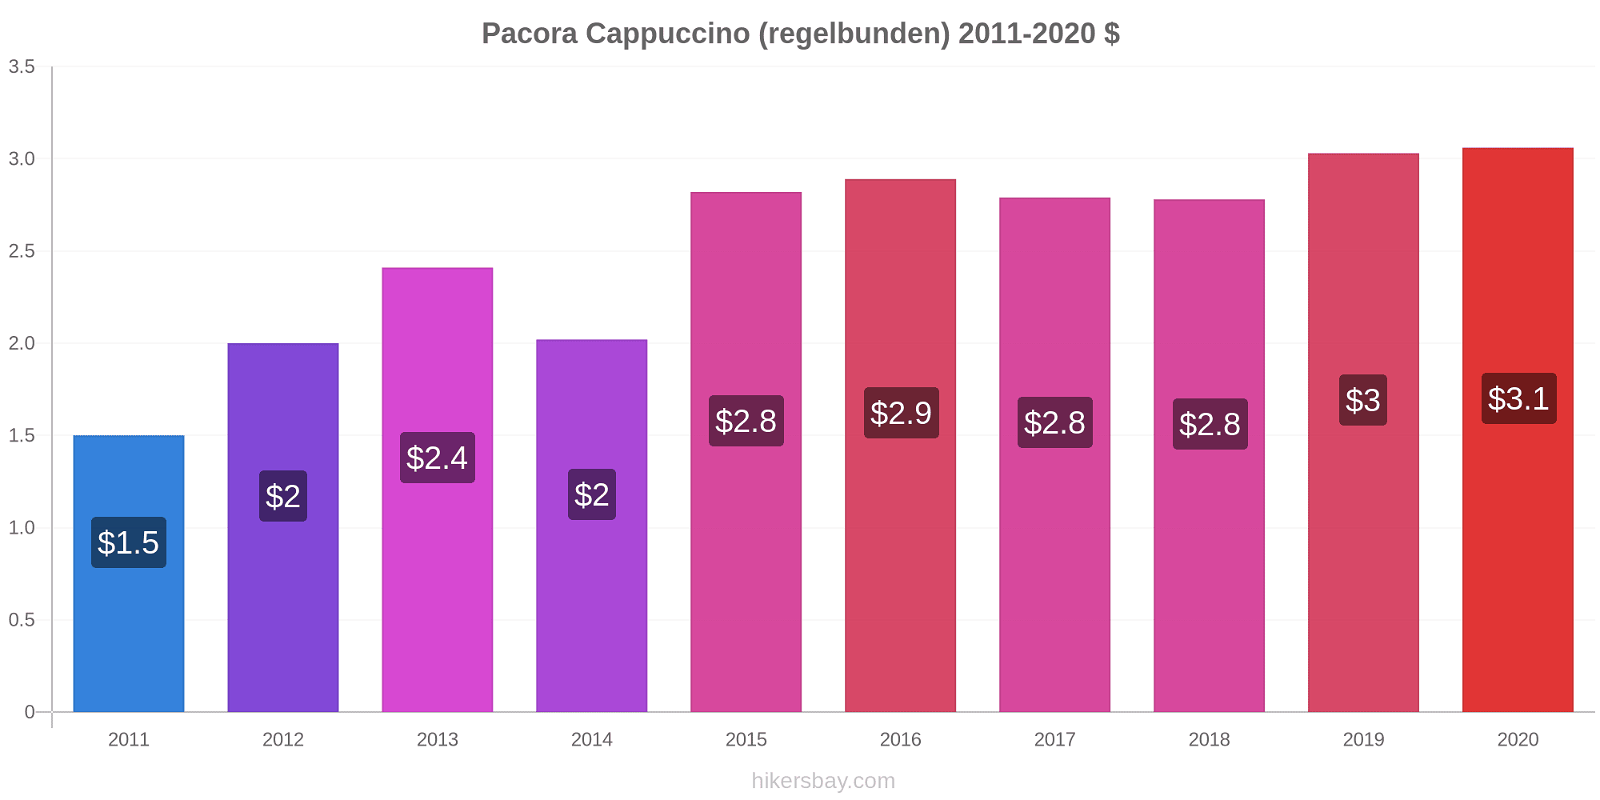 Pacora prisförändringar Cappuccino (regelbunden) hikersbay.com